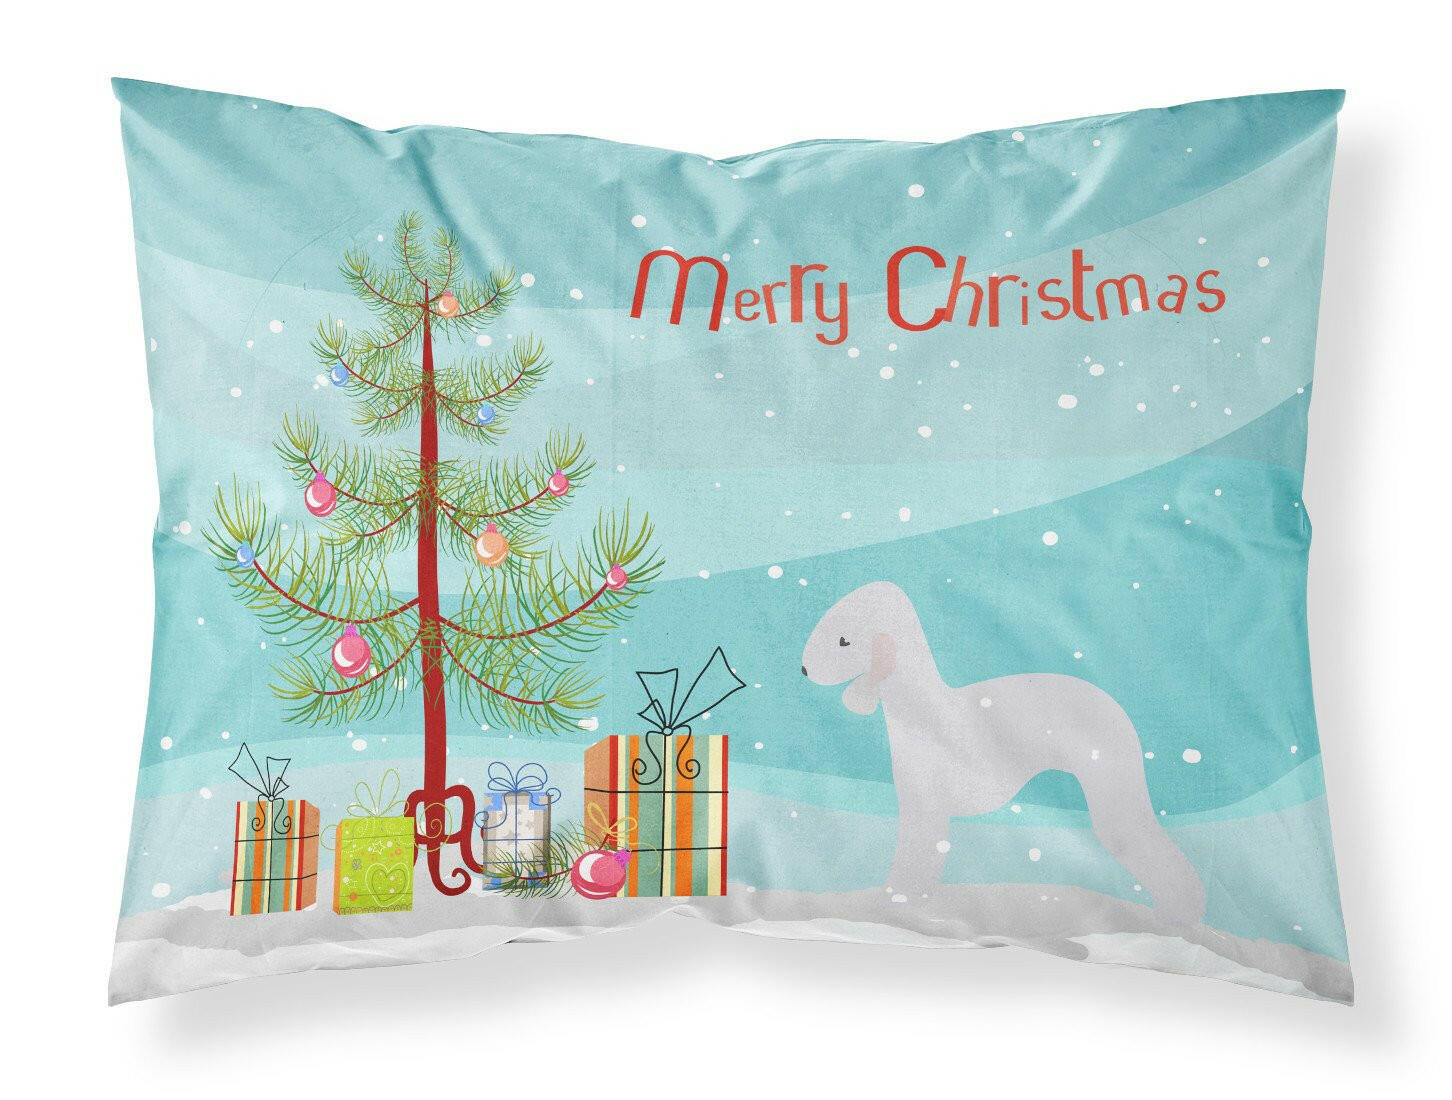 Bedlington Terrier Merry Christmas Tree Fabric Standard Pillowcase BB2912PILLOWCASE by Caroline's Treasures